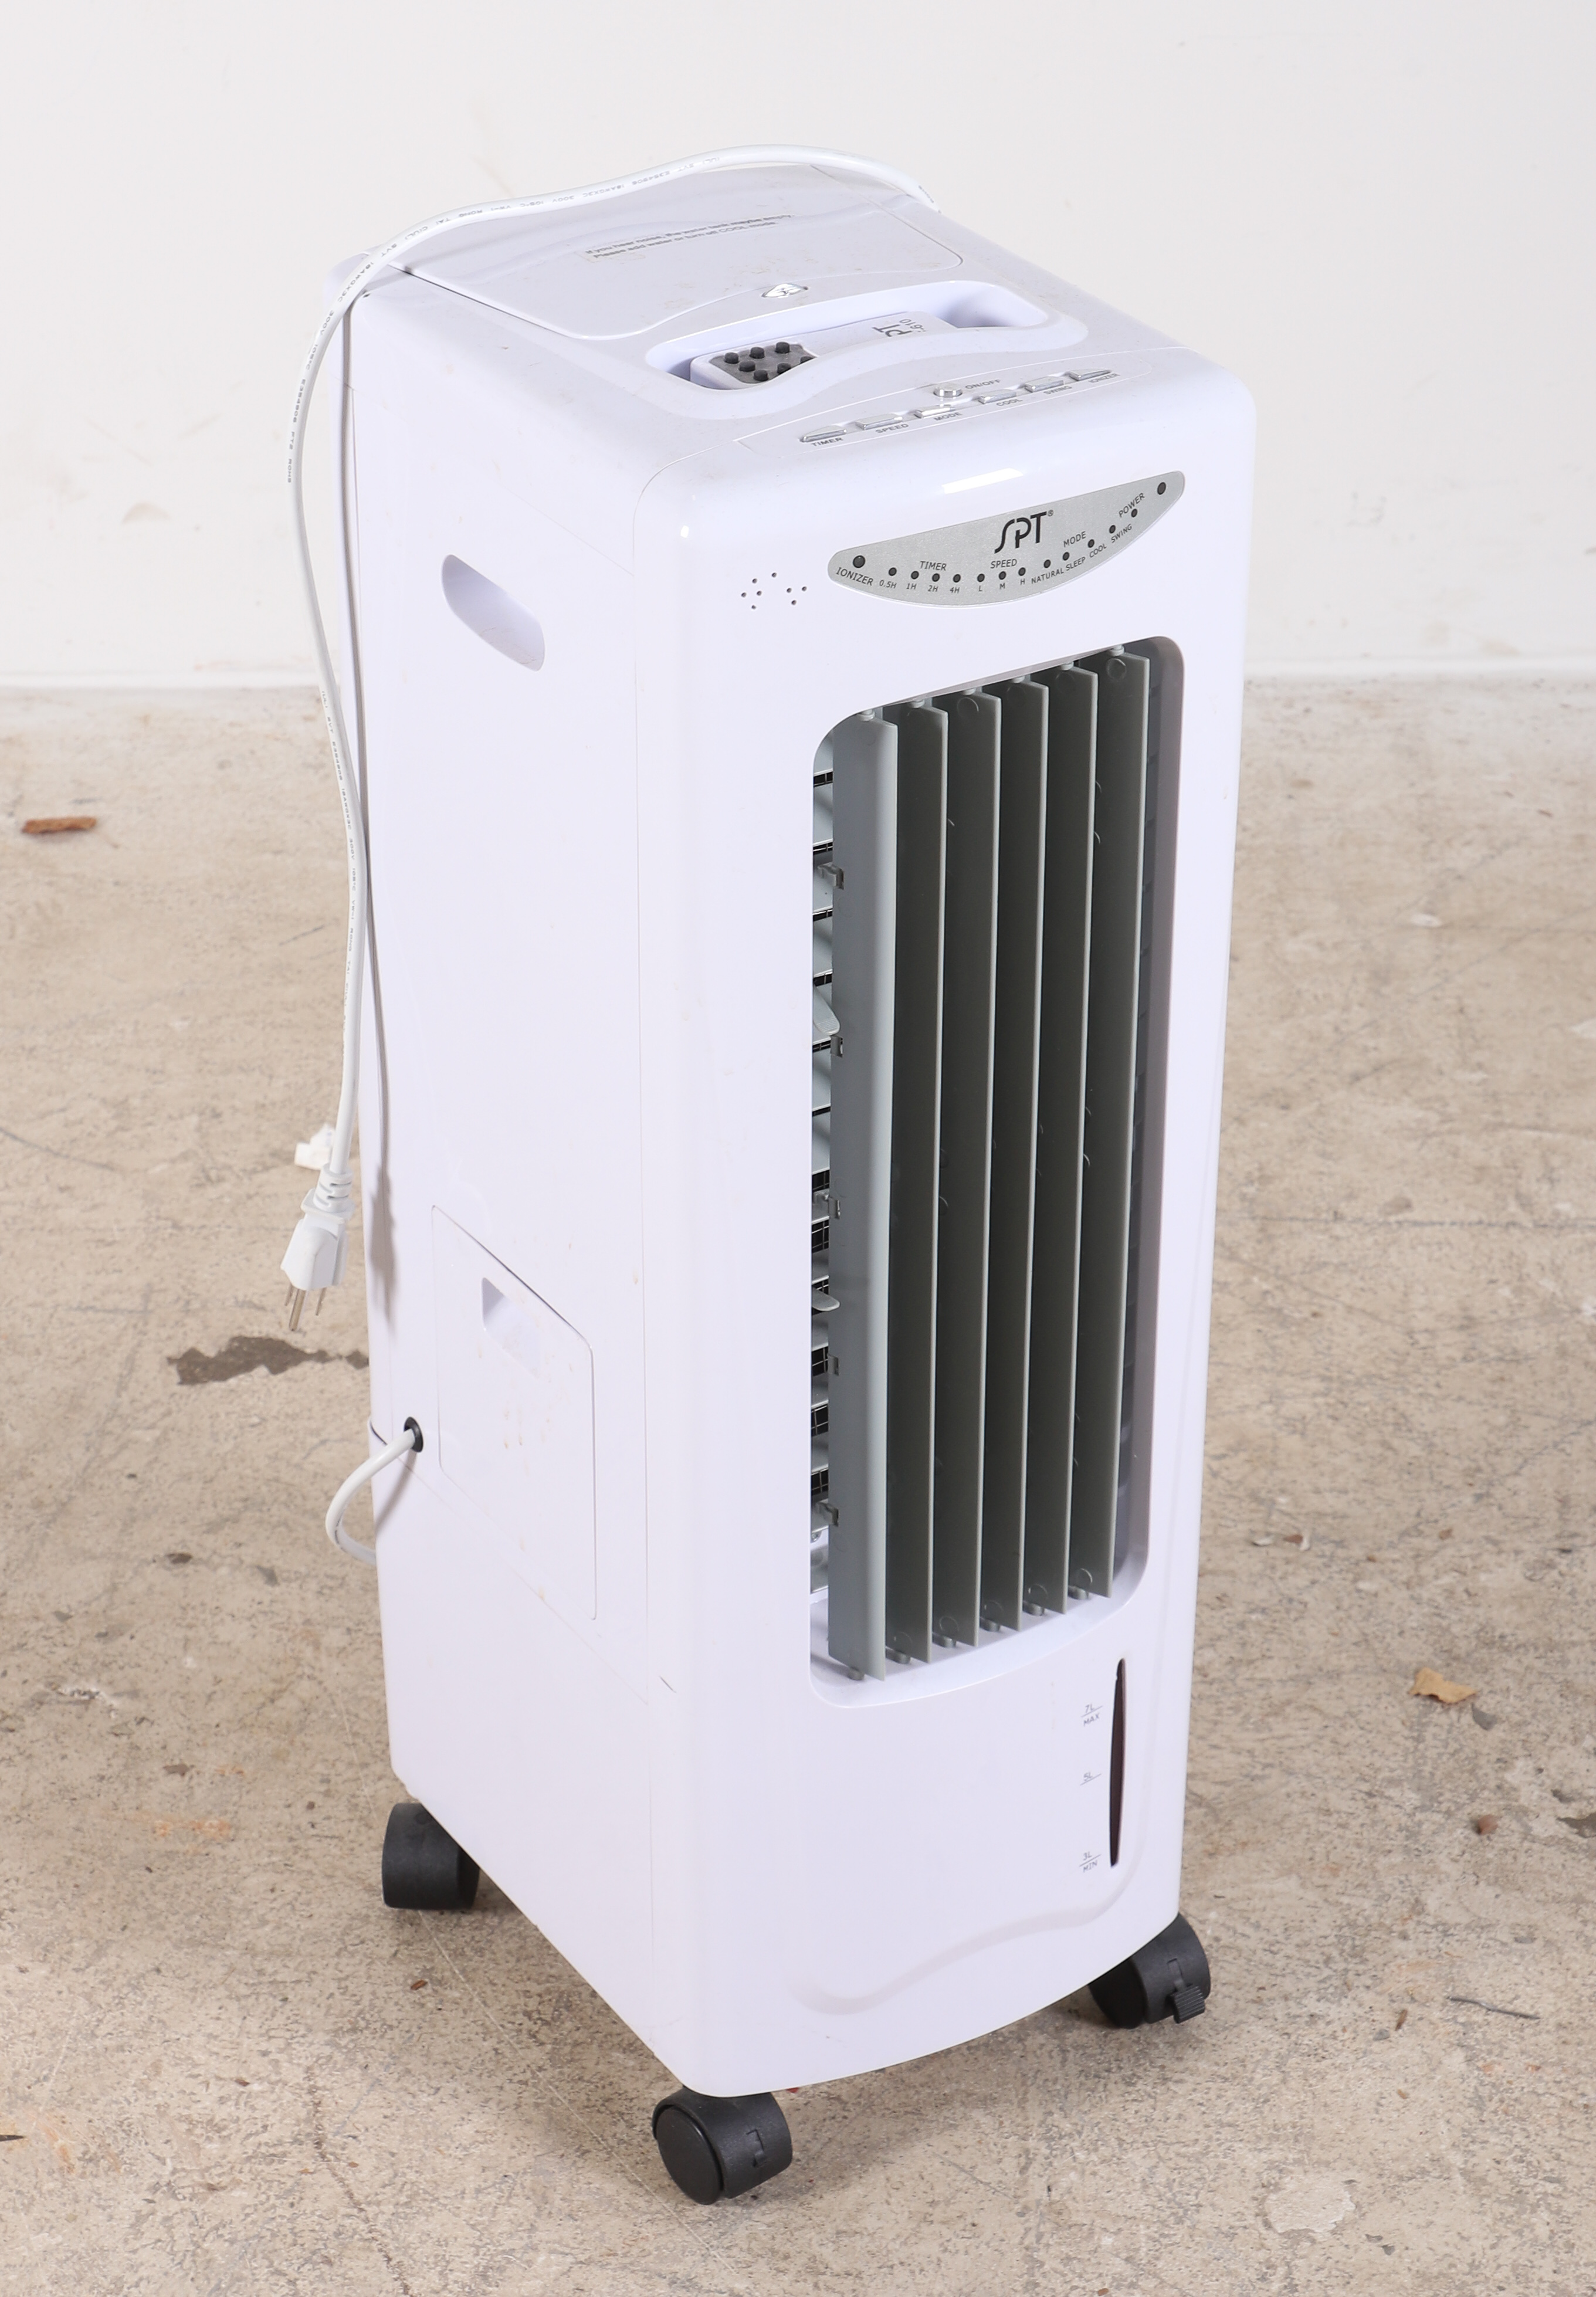 SPT Evaporative Air Cooler, Model SF-610